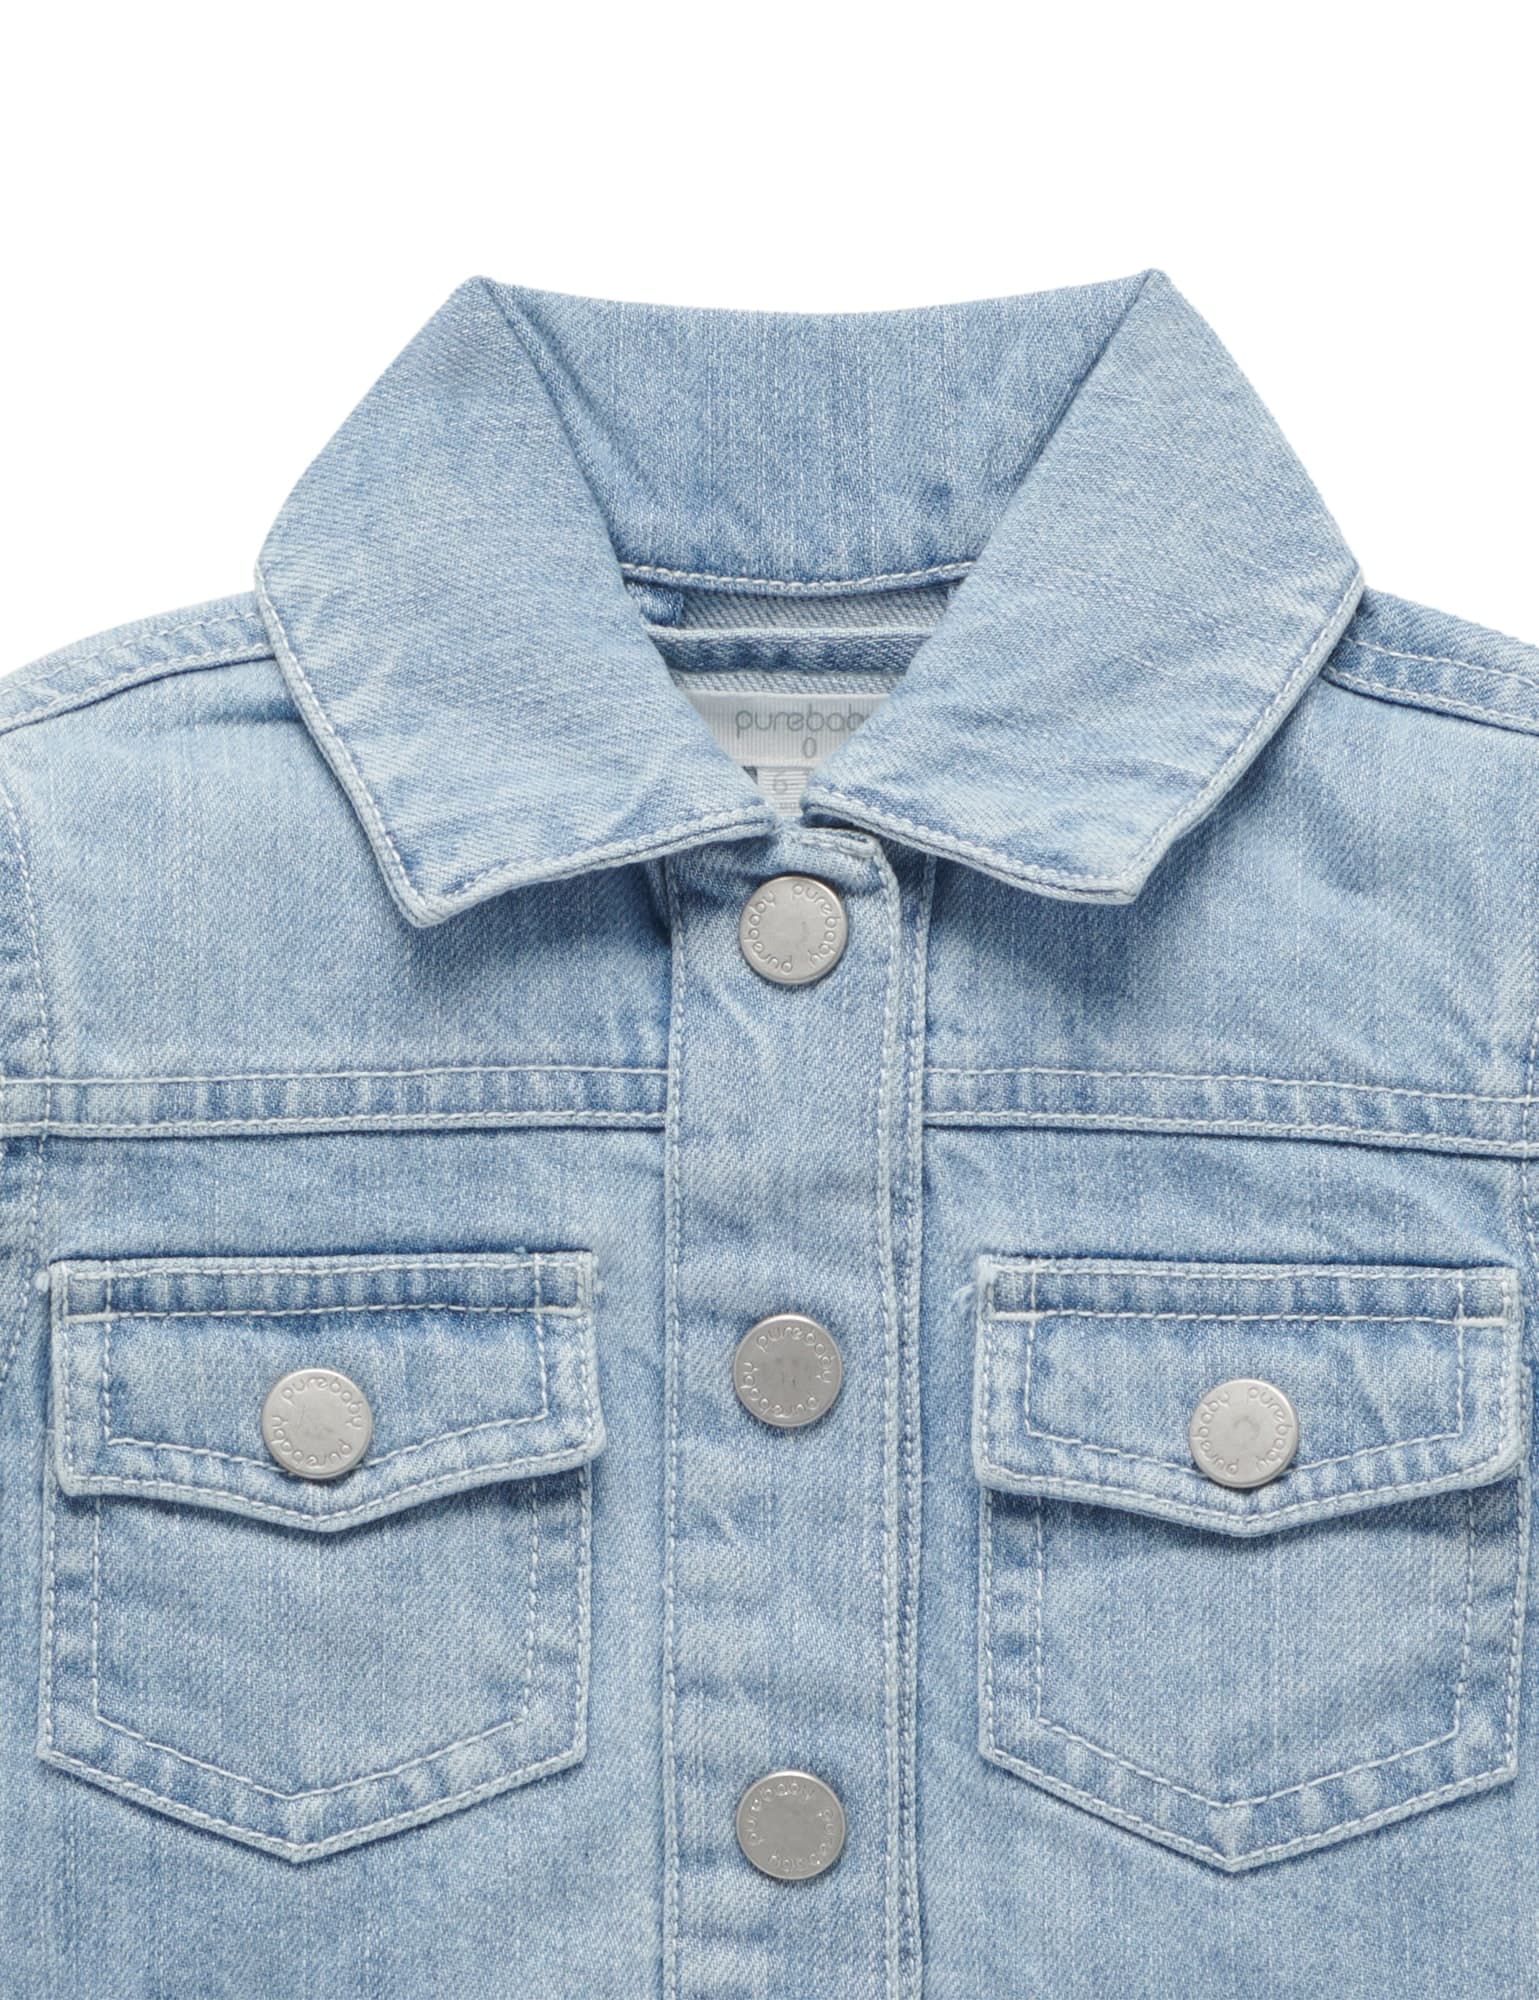 Purebaby Cropped Denim Jacket Faded Denim | Tops, Jackets & Knitwear ...